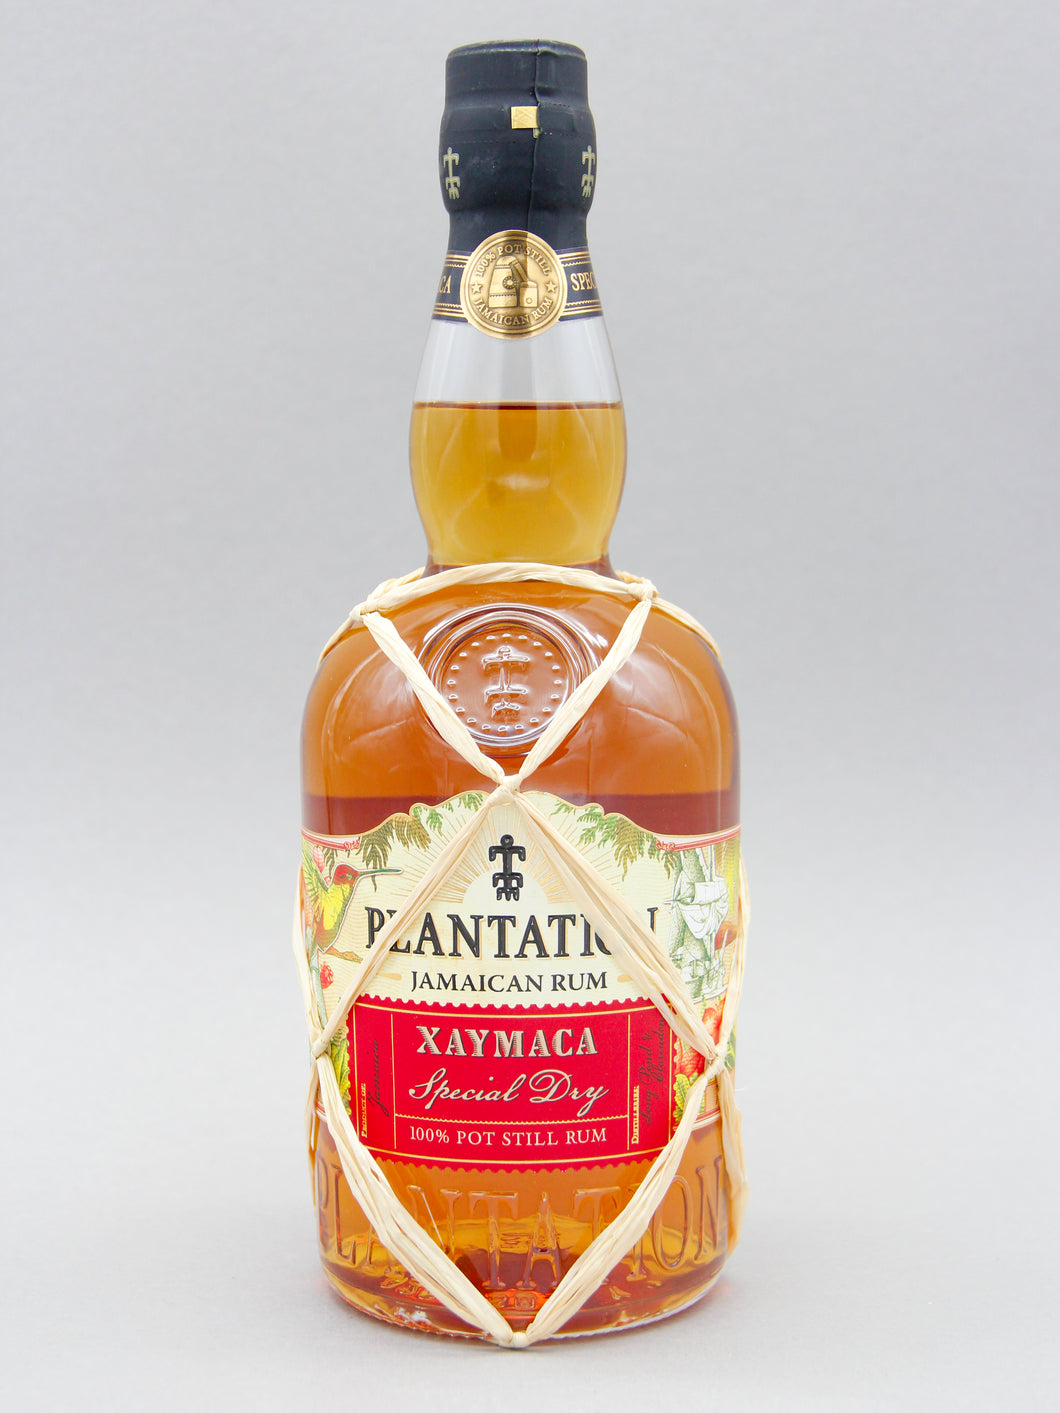 Plantation Xaymaca Special Dry Rum, Jamaica (43%, 70cl)